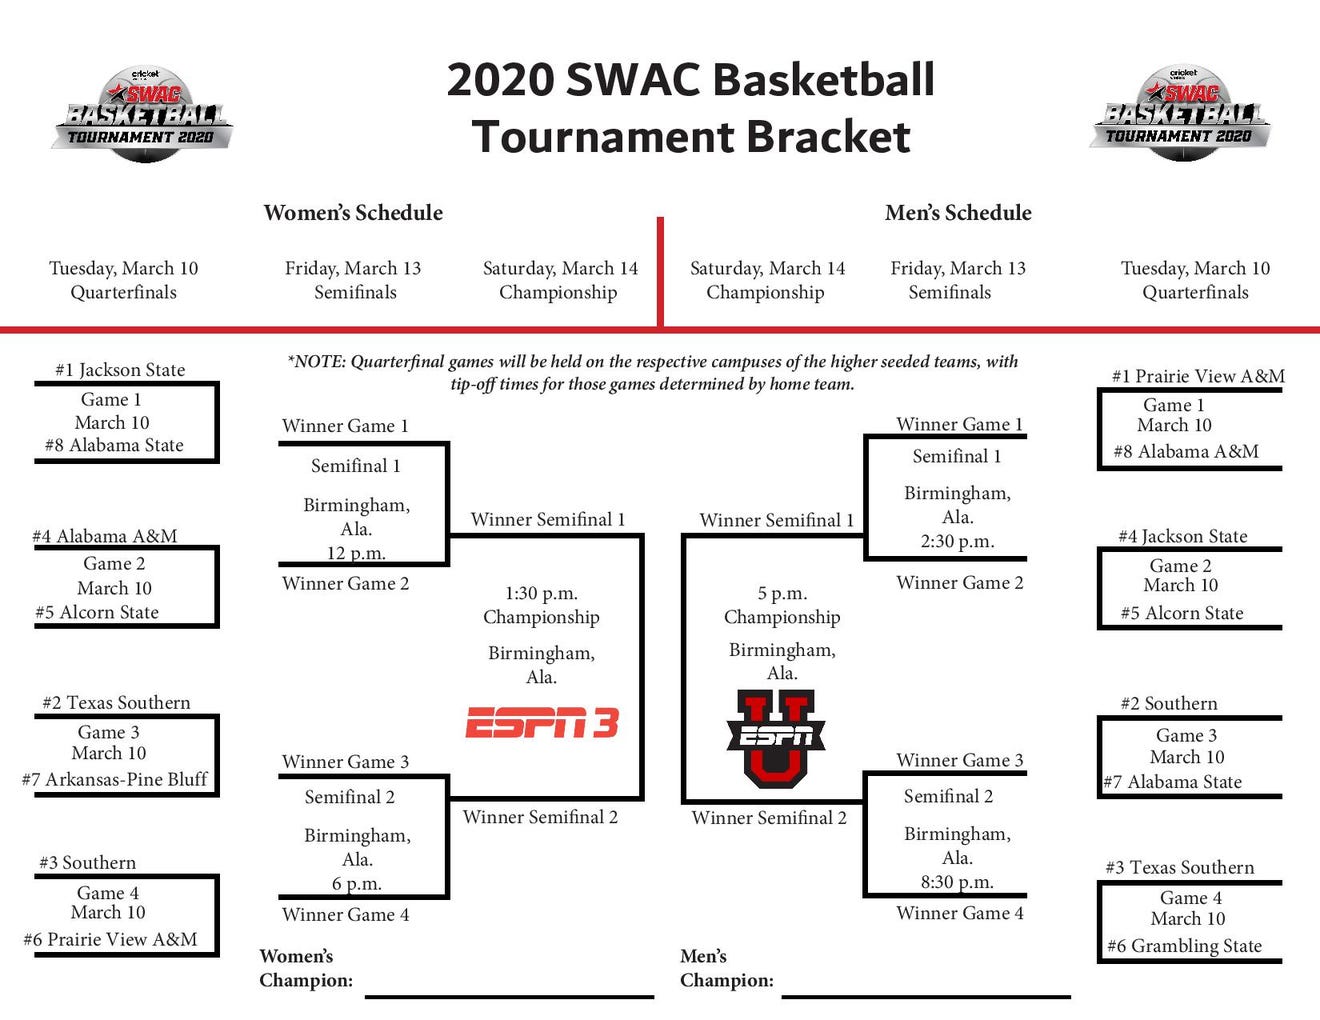 2020 SWAC Men's Basketball Tournament canceled